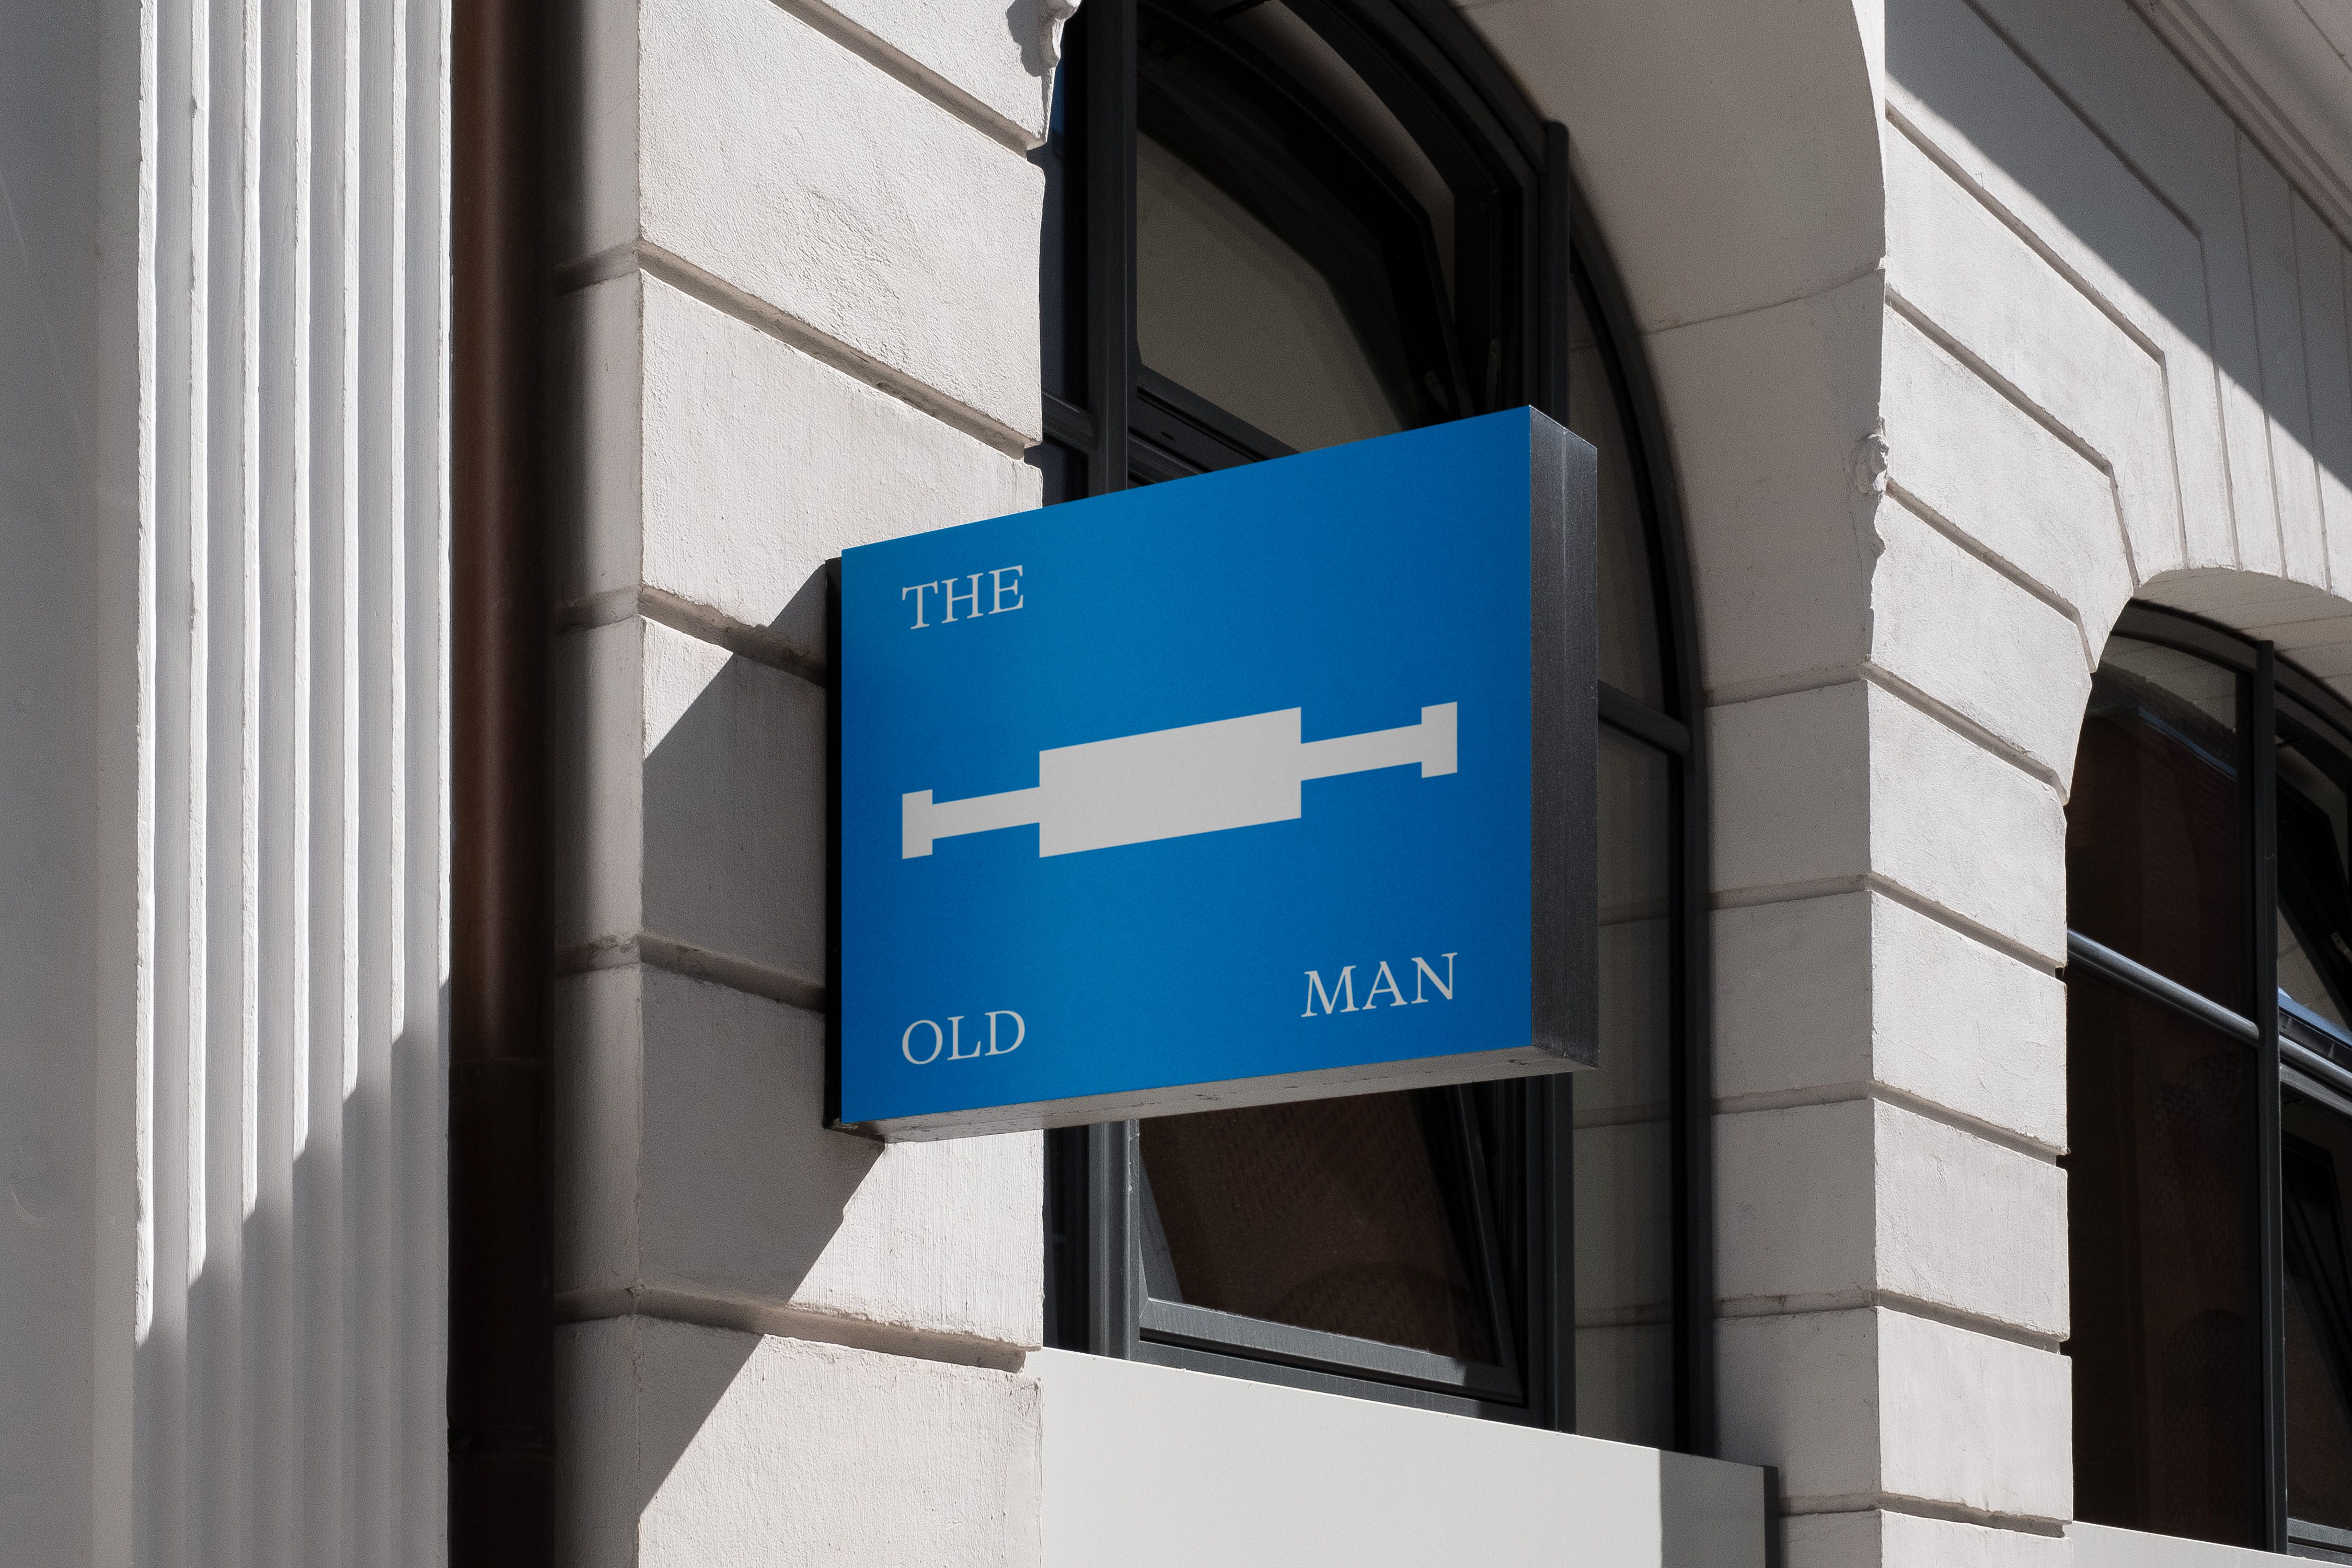 The Old Man bar rebrand